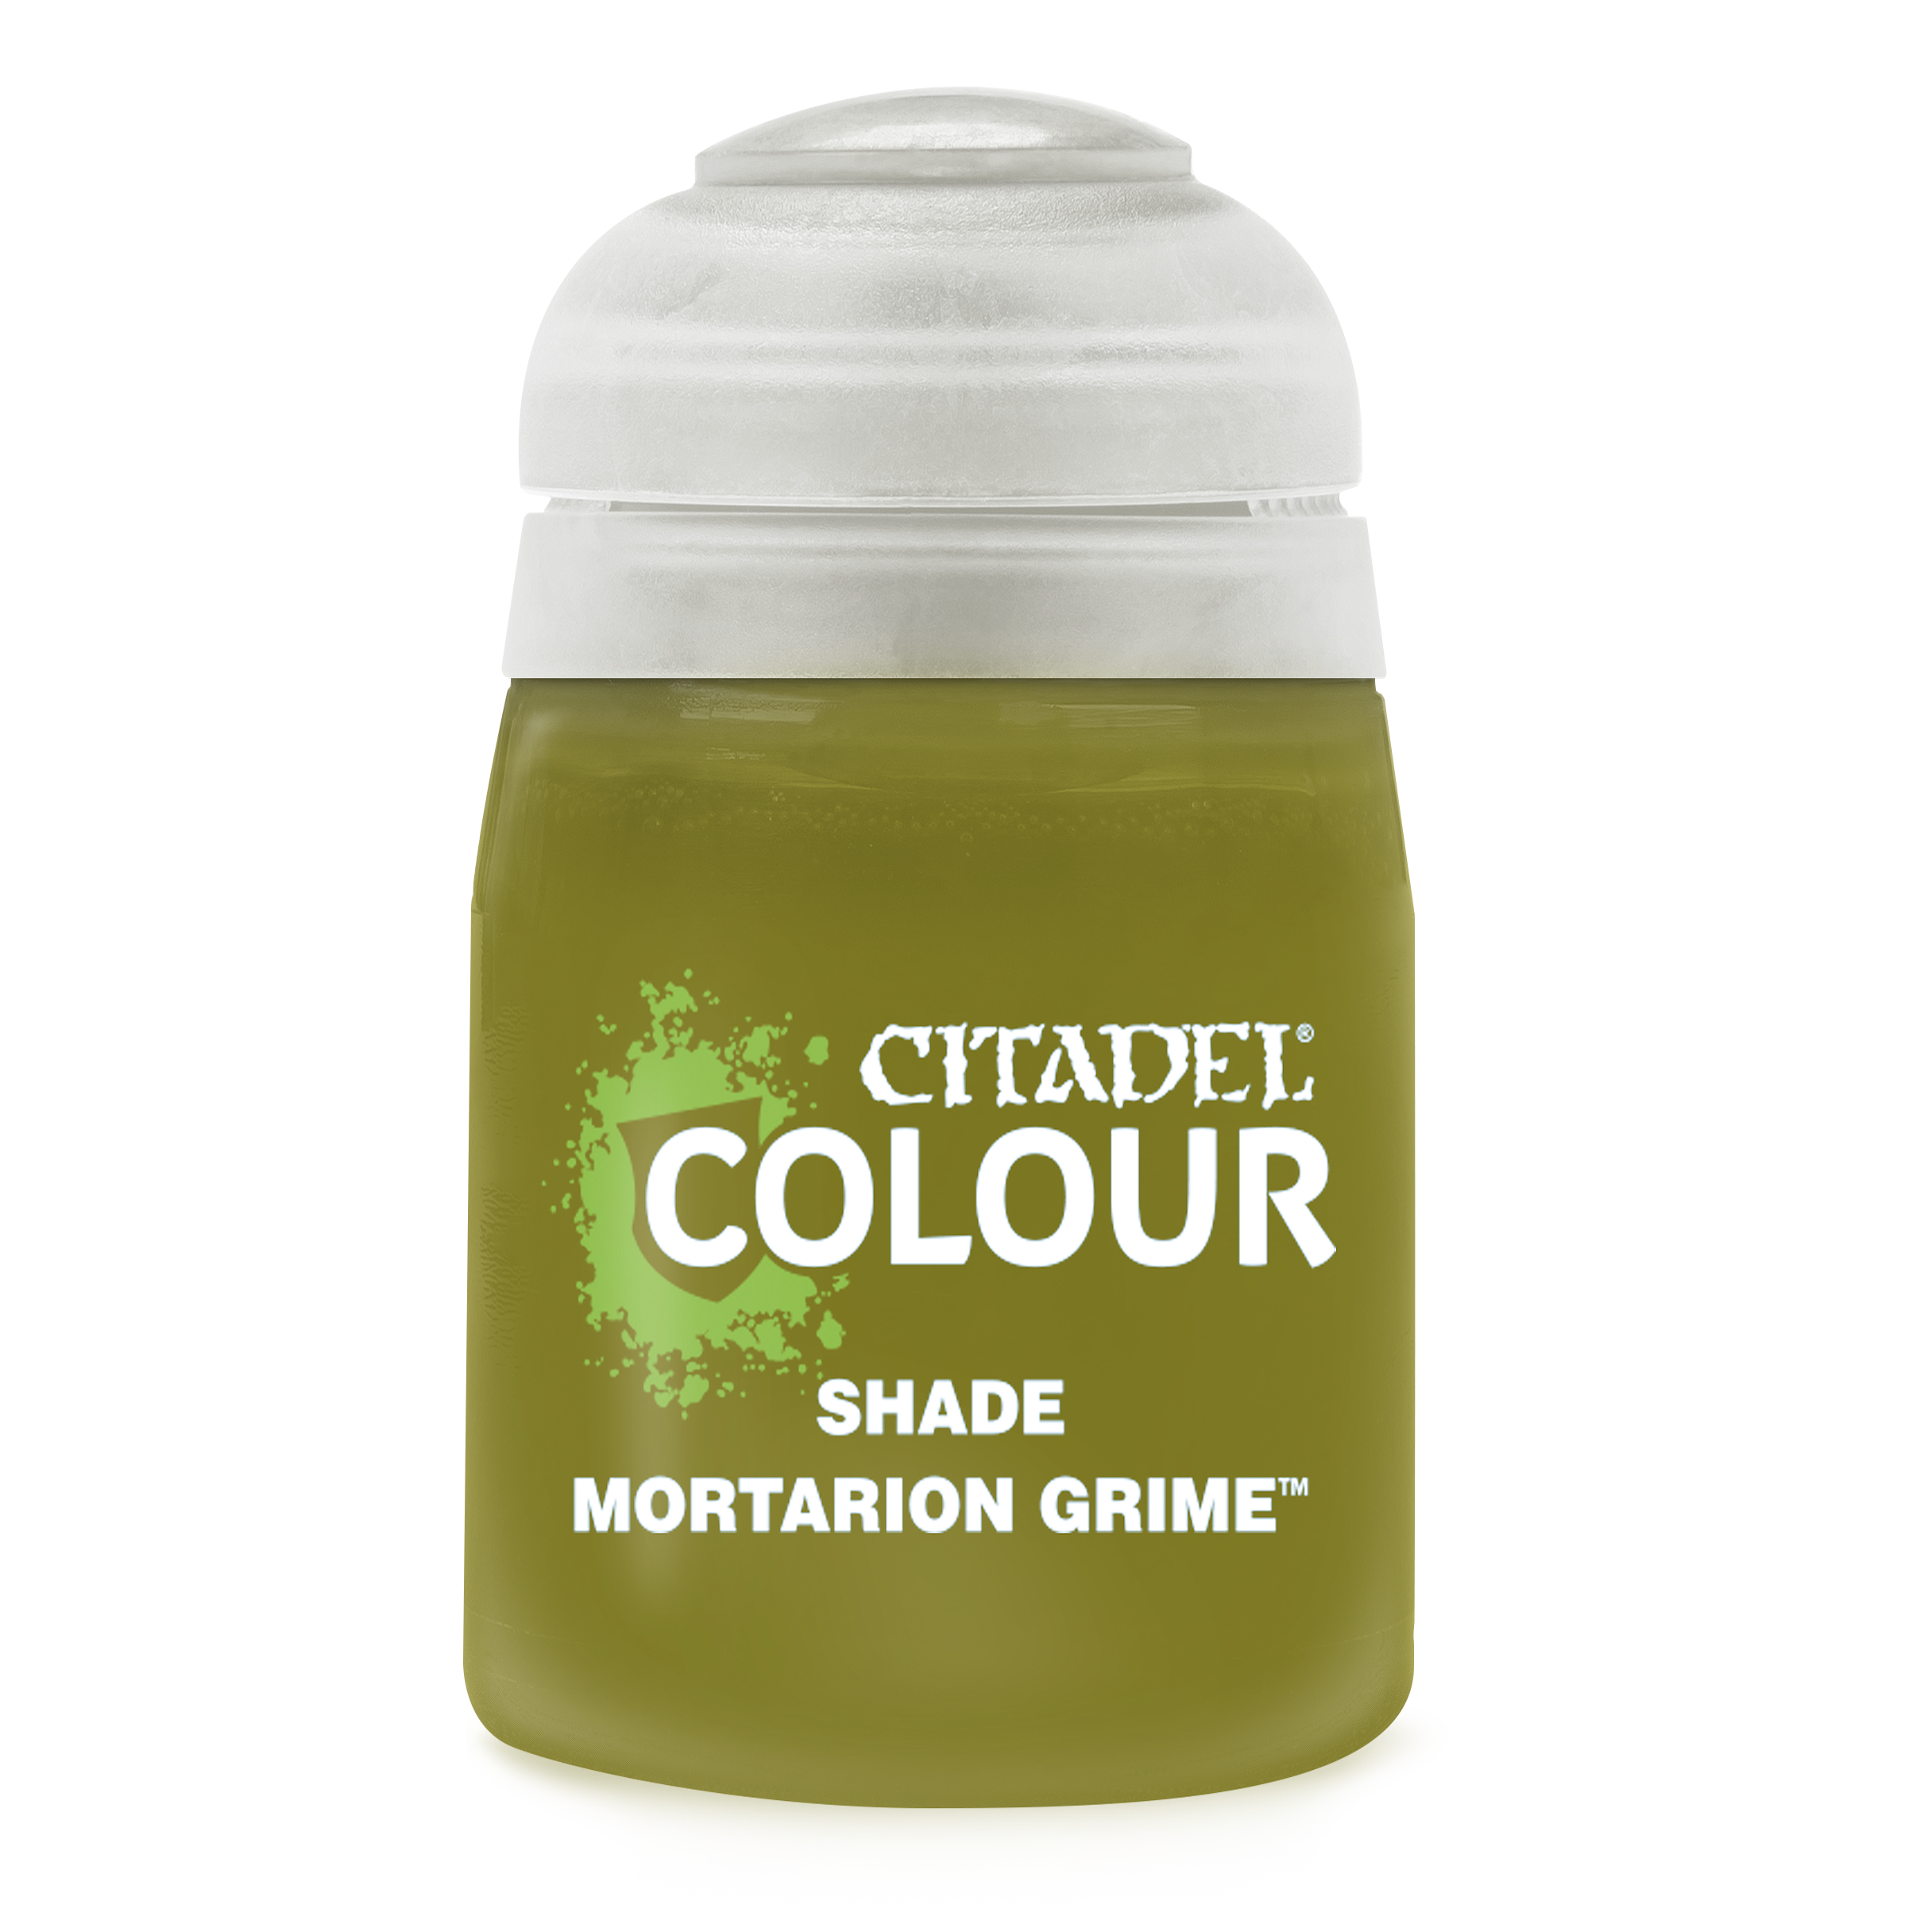 Mortarion Grime - Citadel Shade Colour